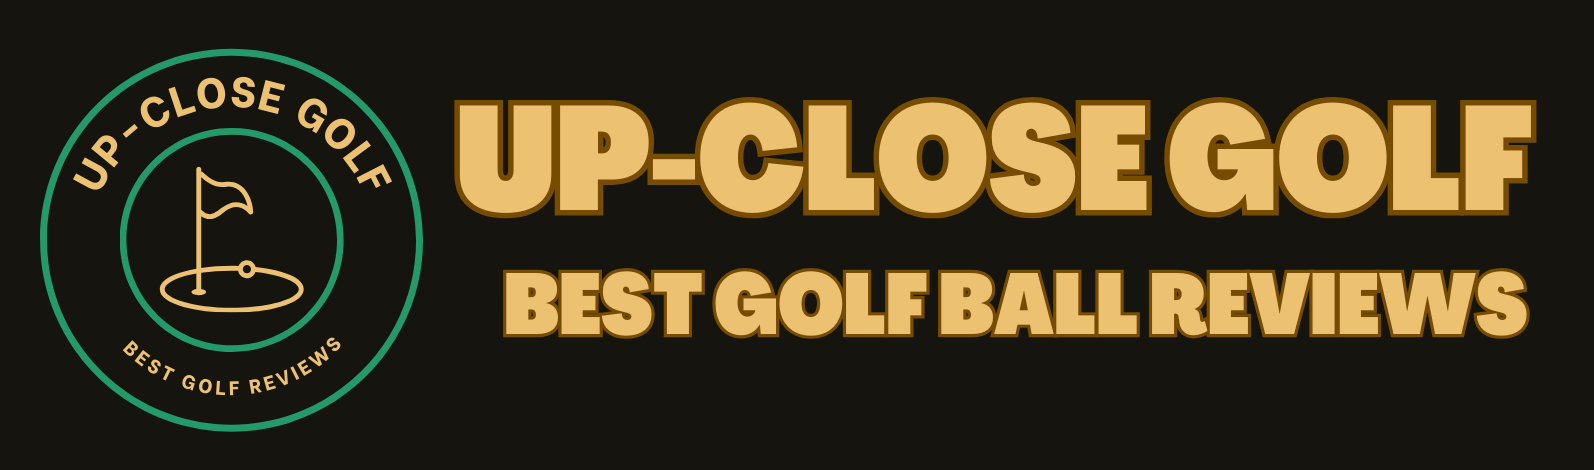 up close golf logo